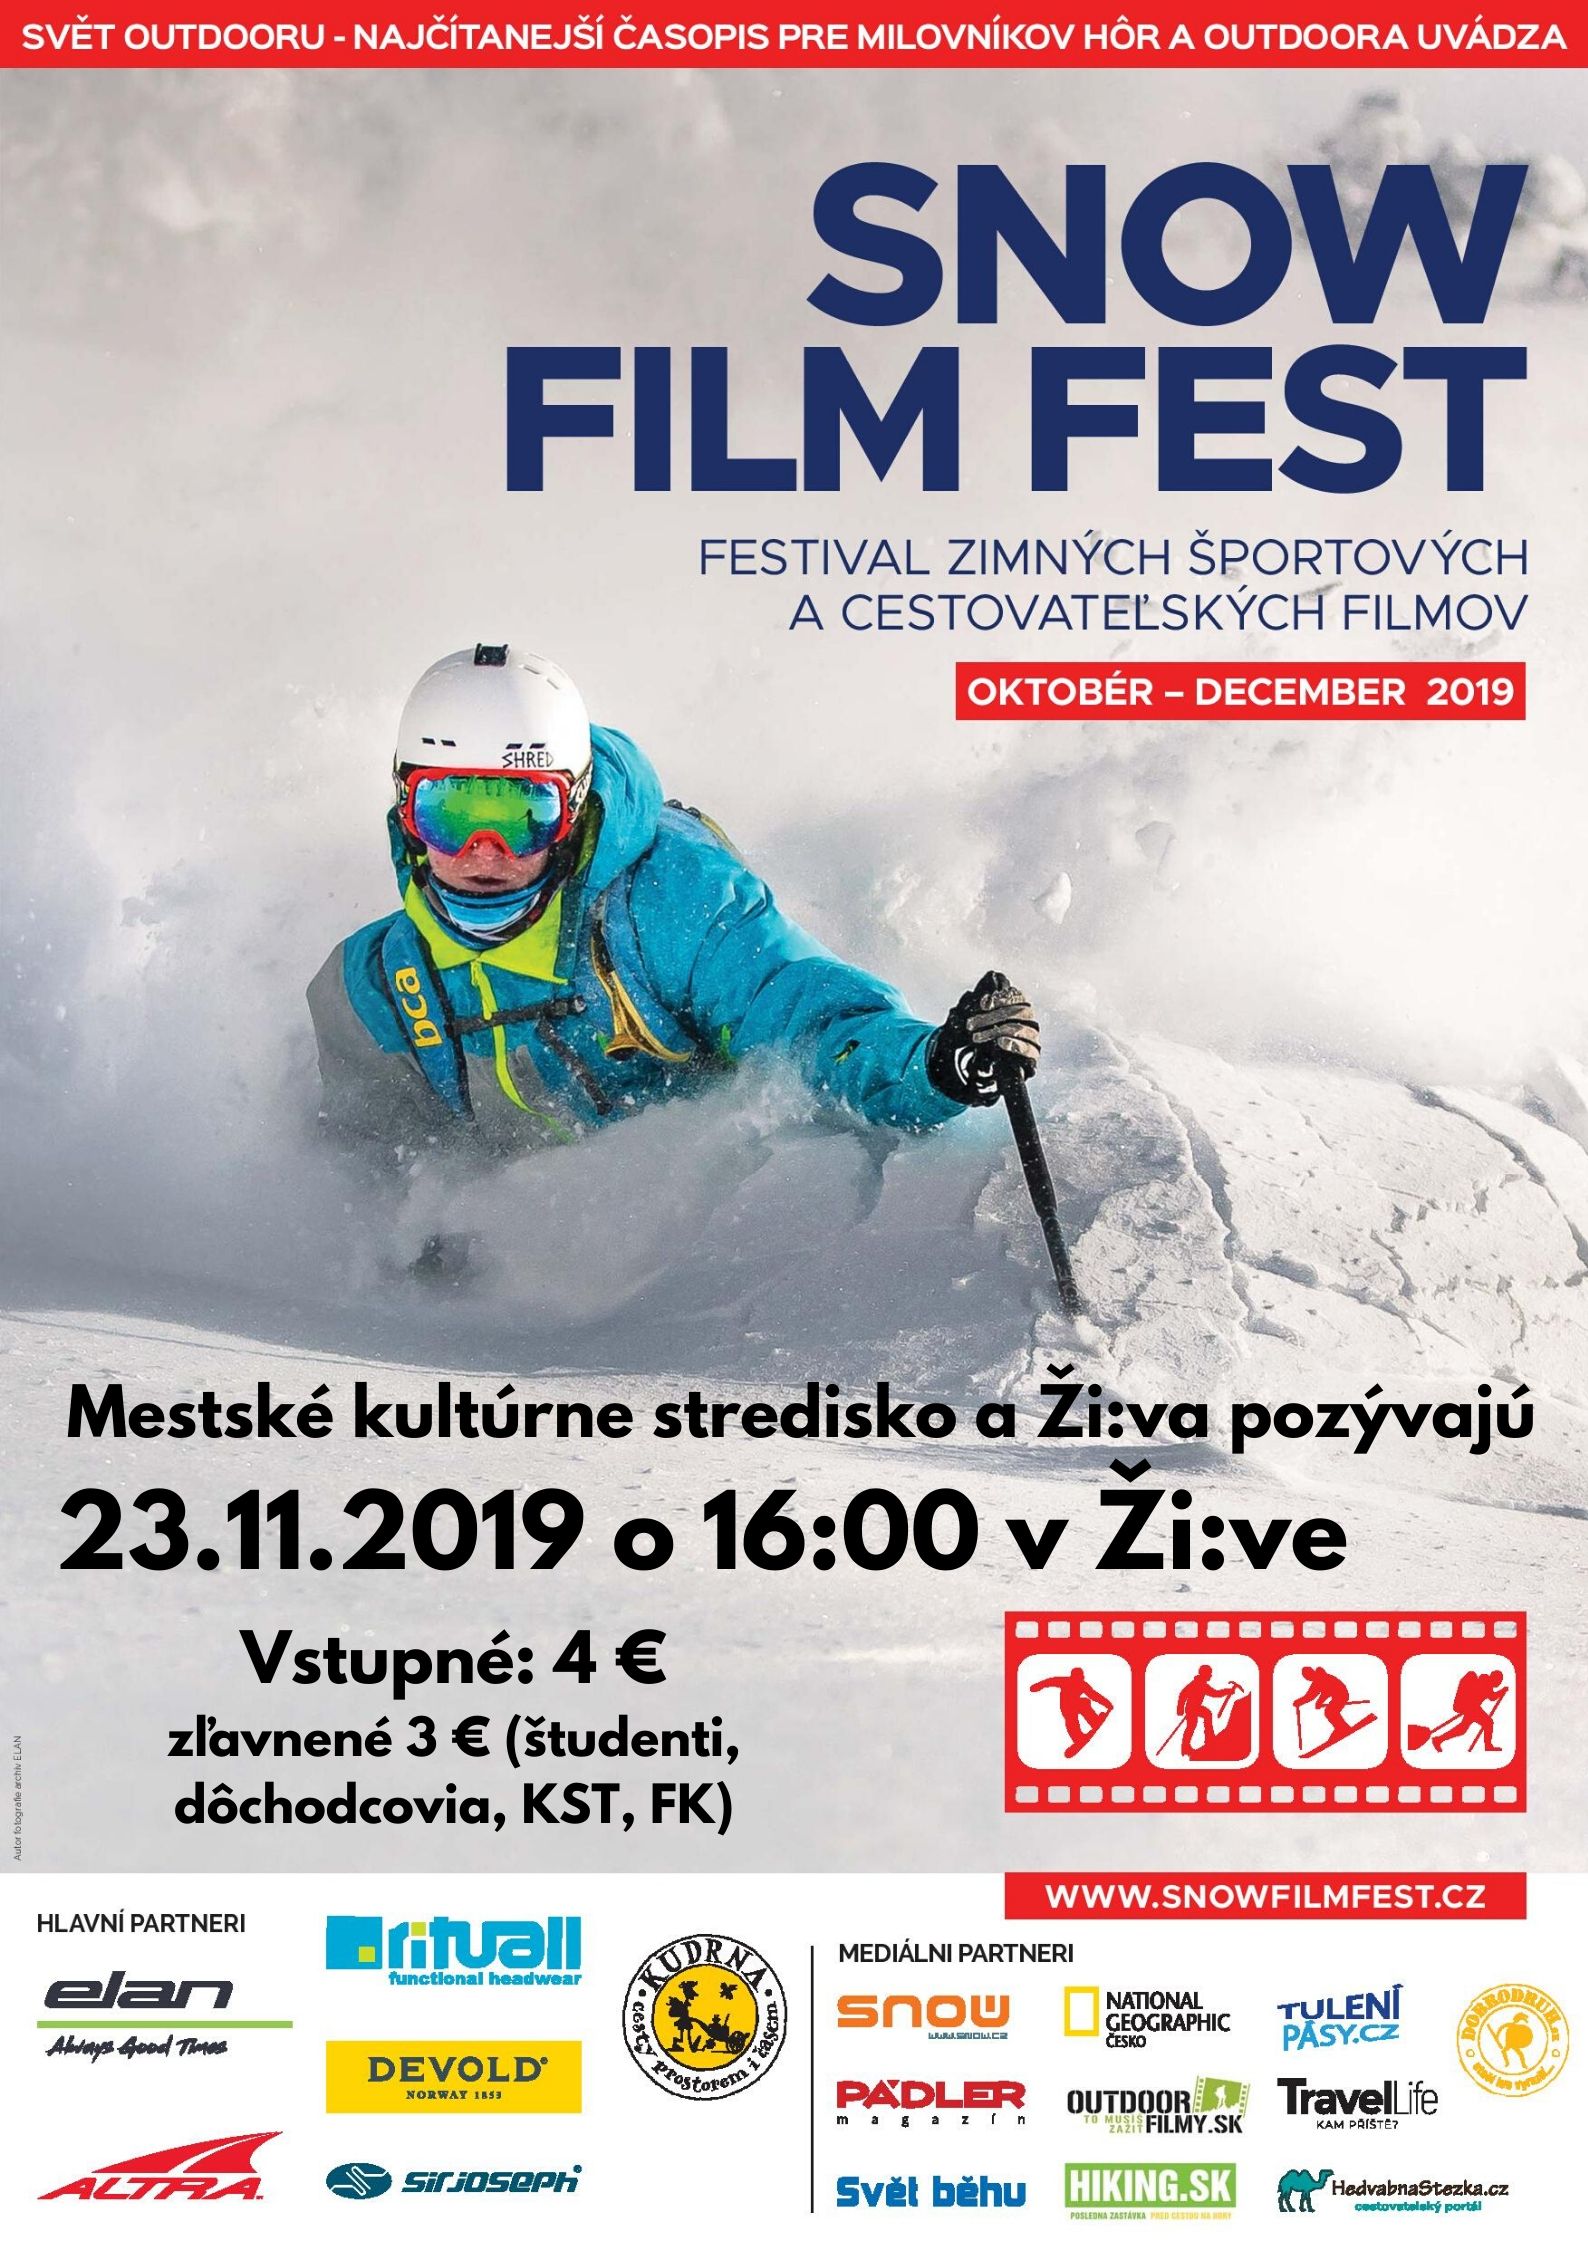 Snow Film Fest 2019 Bnovce nad Bebravou